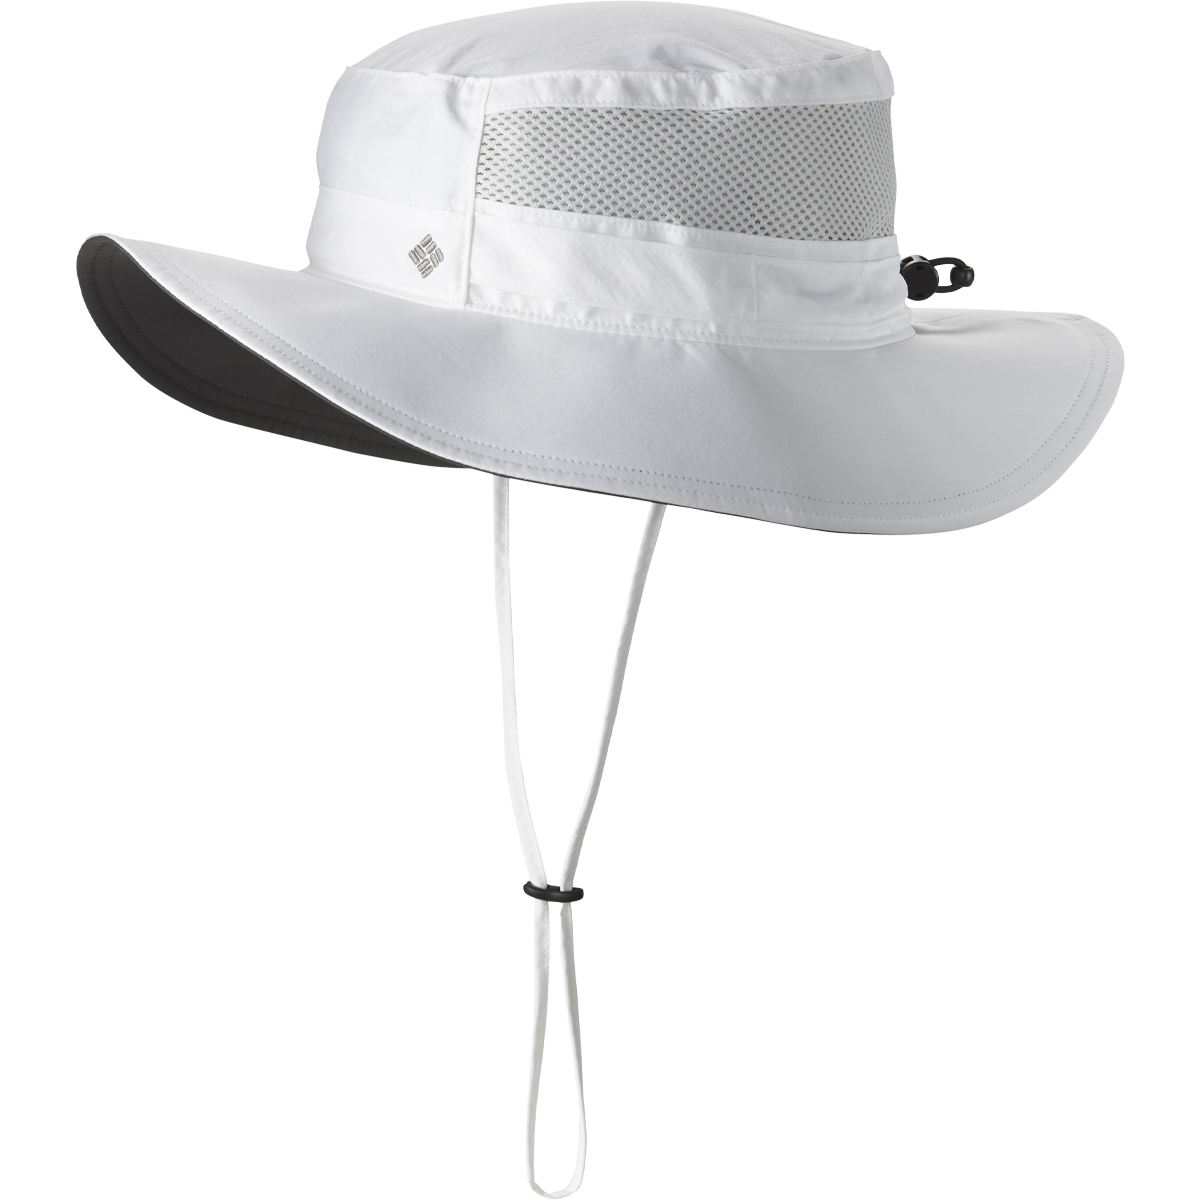 Columbia Bora Bora Booney II Sun Hats, White, One Size